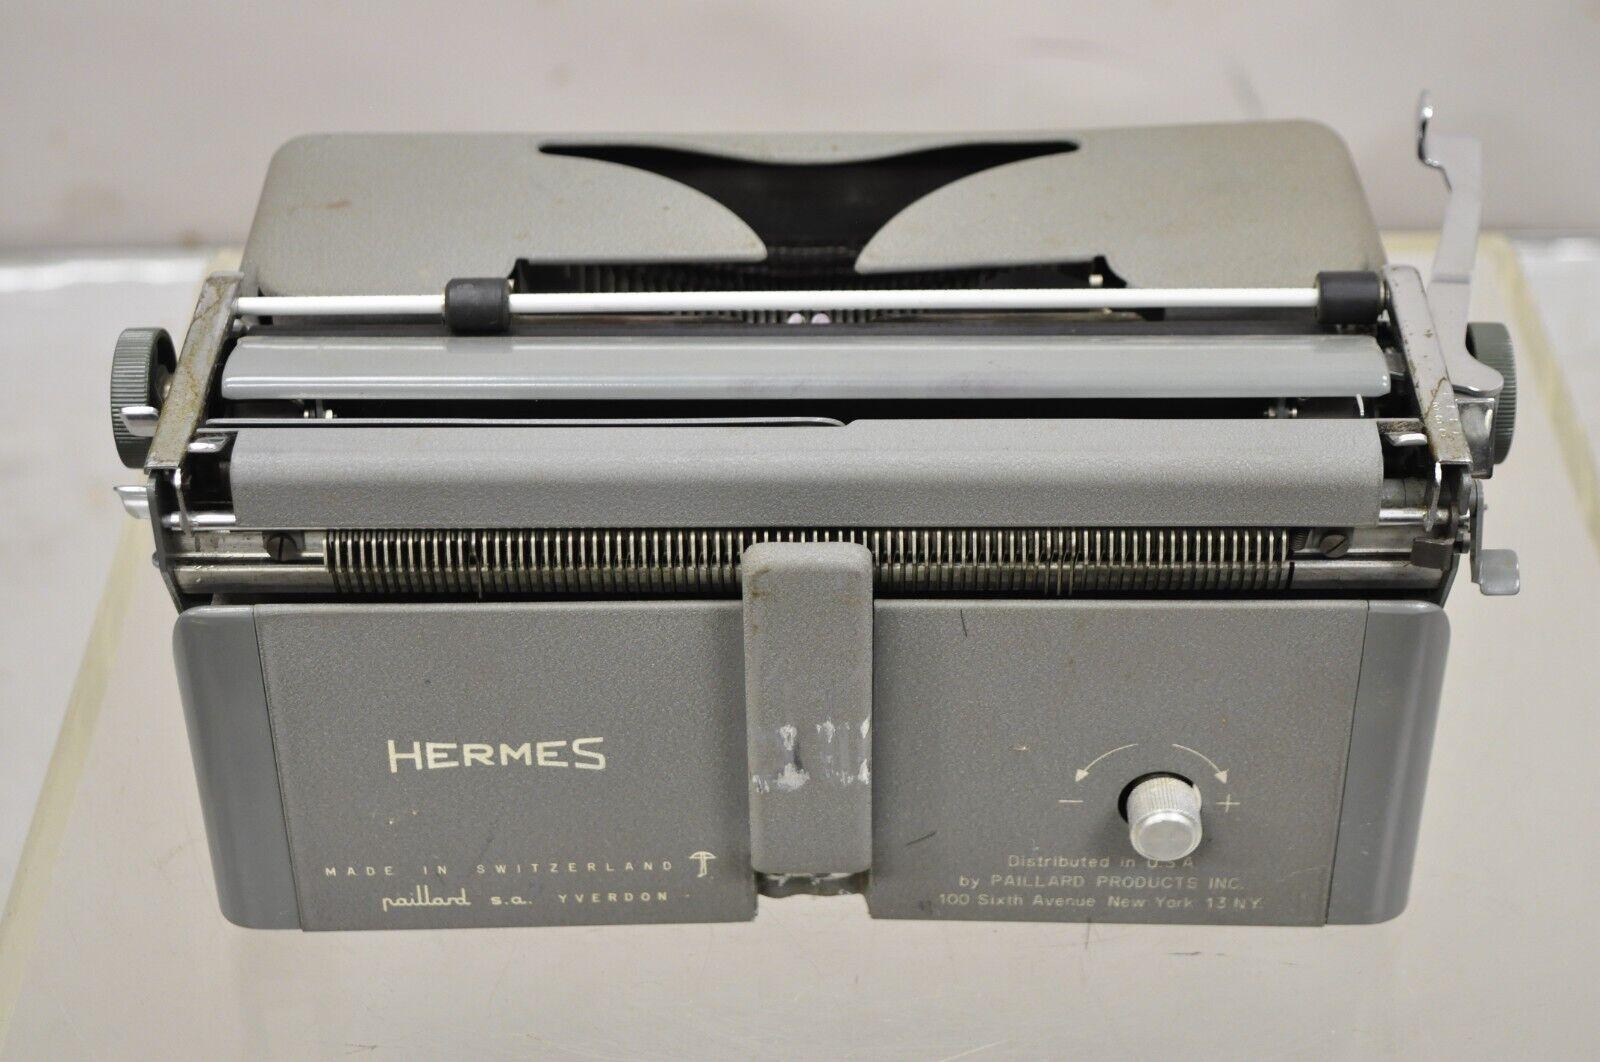 Vintage Hermes 2000 by Paillard Manual Typewriter with Green Carrying Case 4